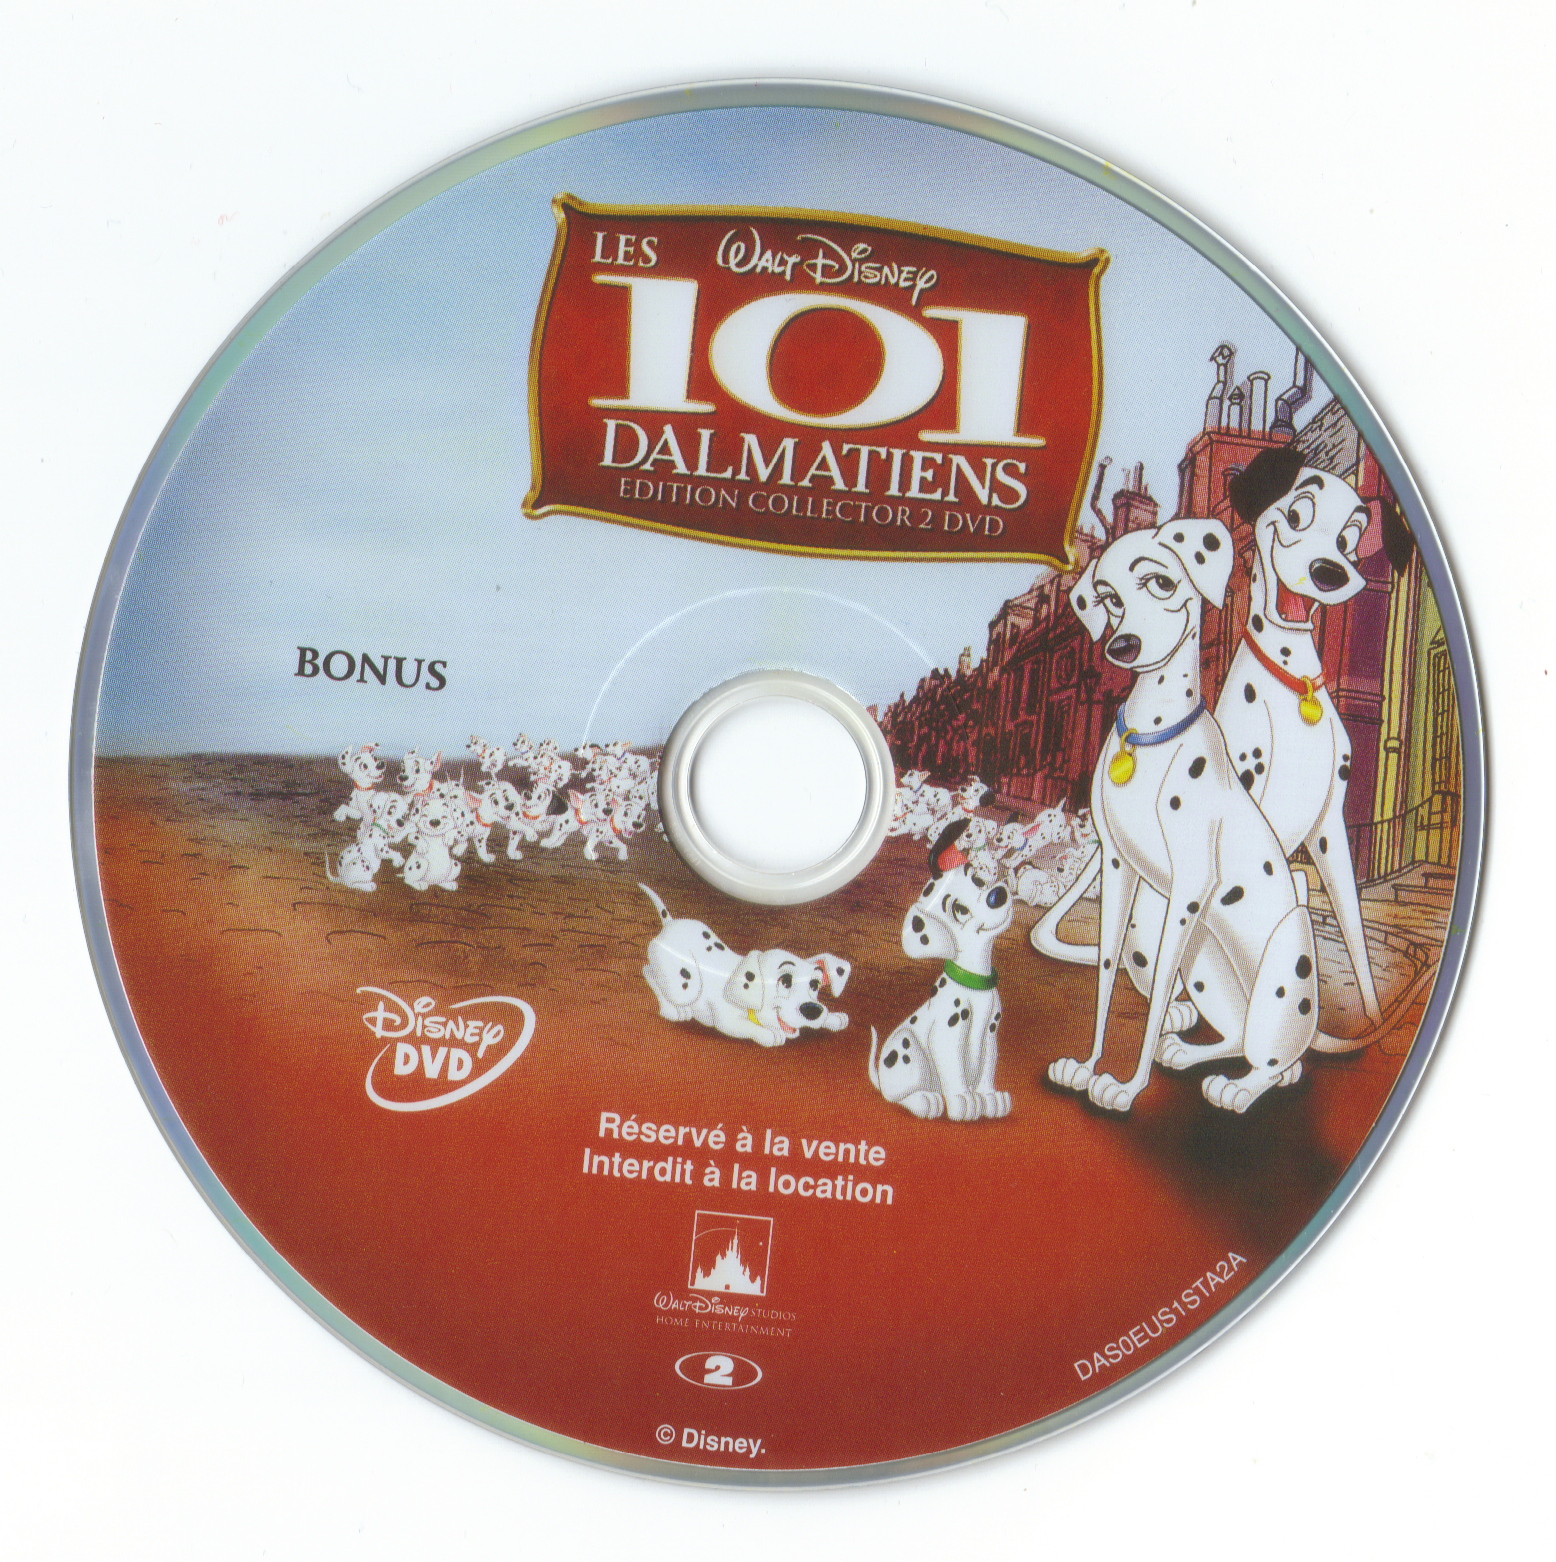 Les 101 dalmatiens DISC 2